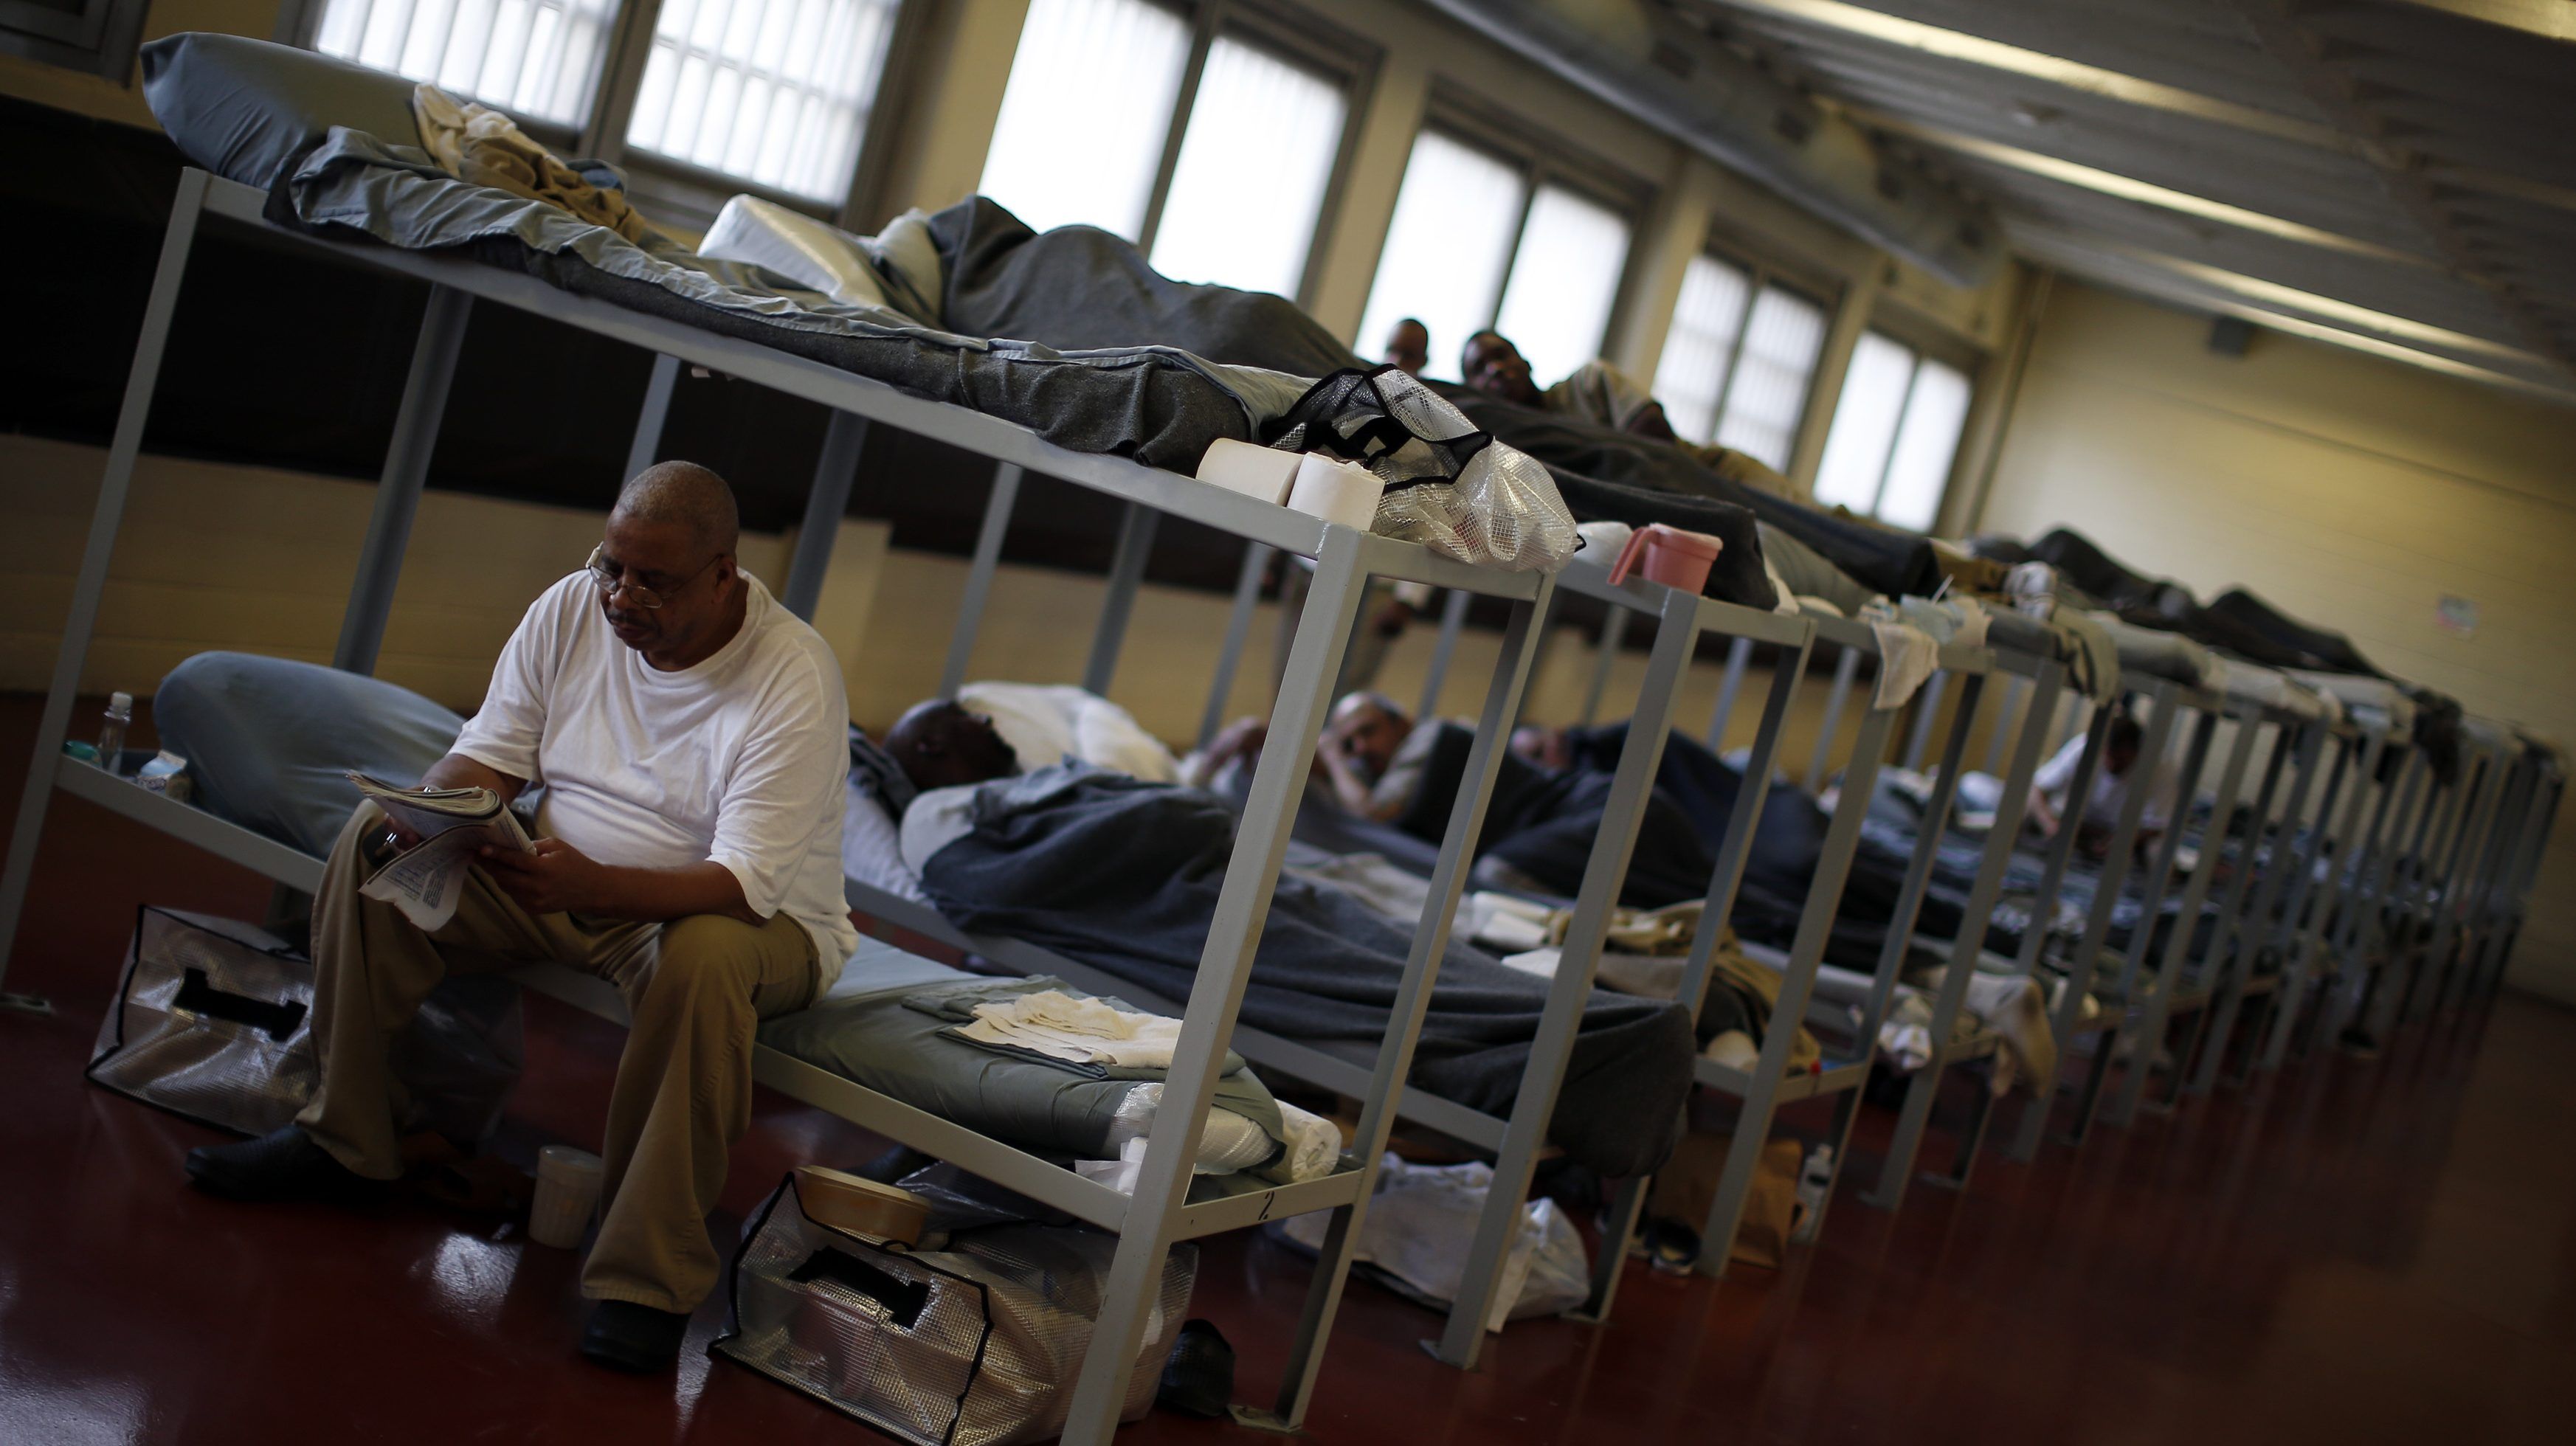 The origins of Covid-19’s racial disparities lie in America’s prisons